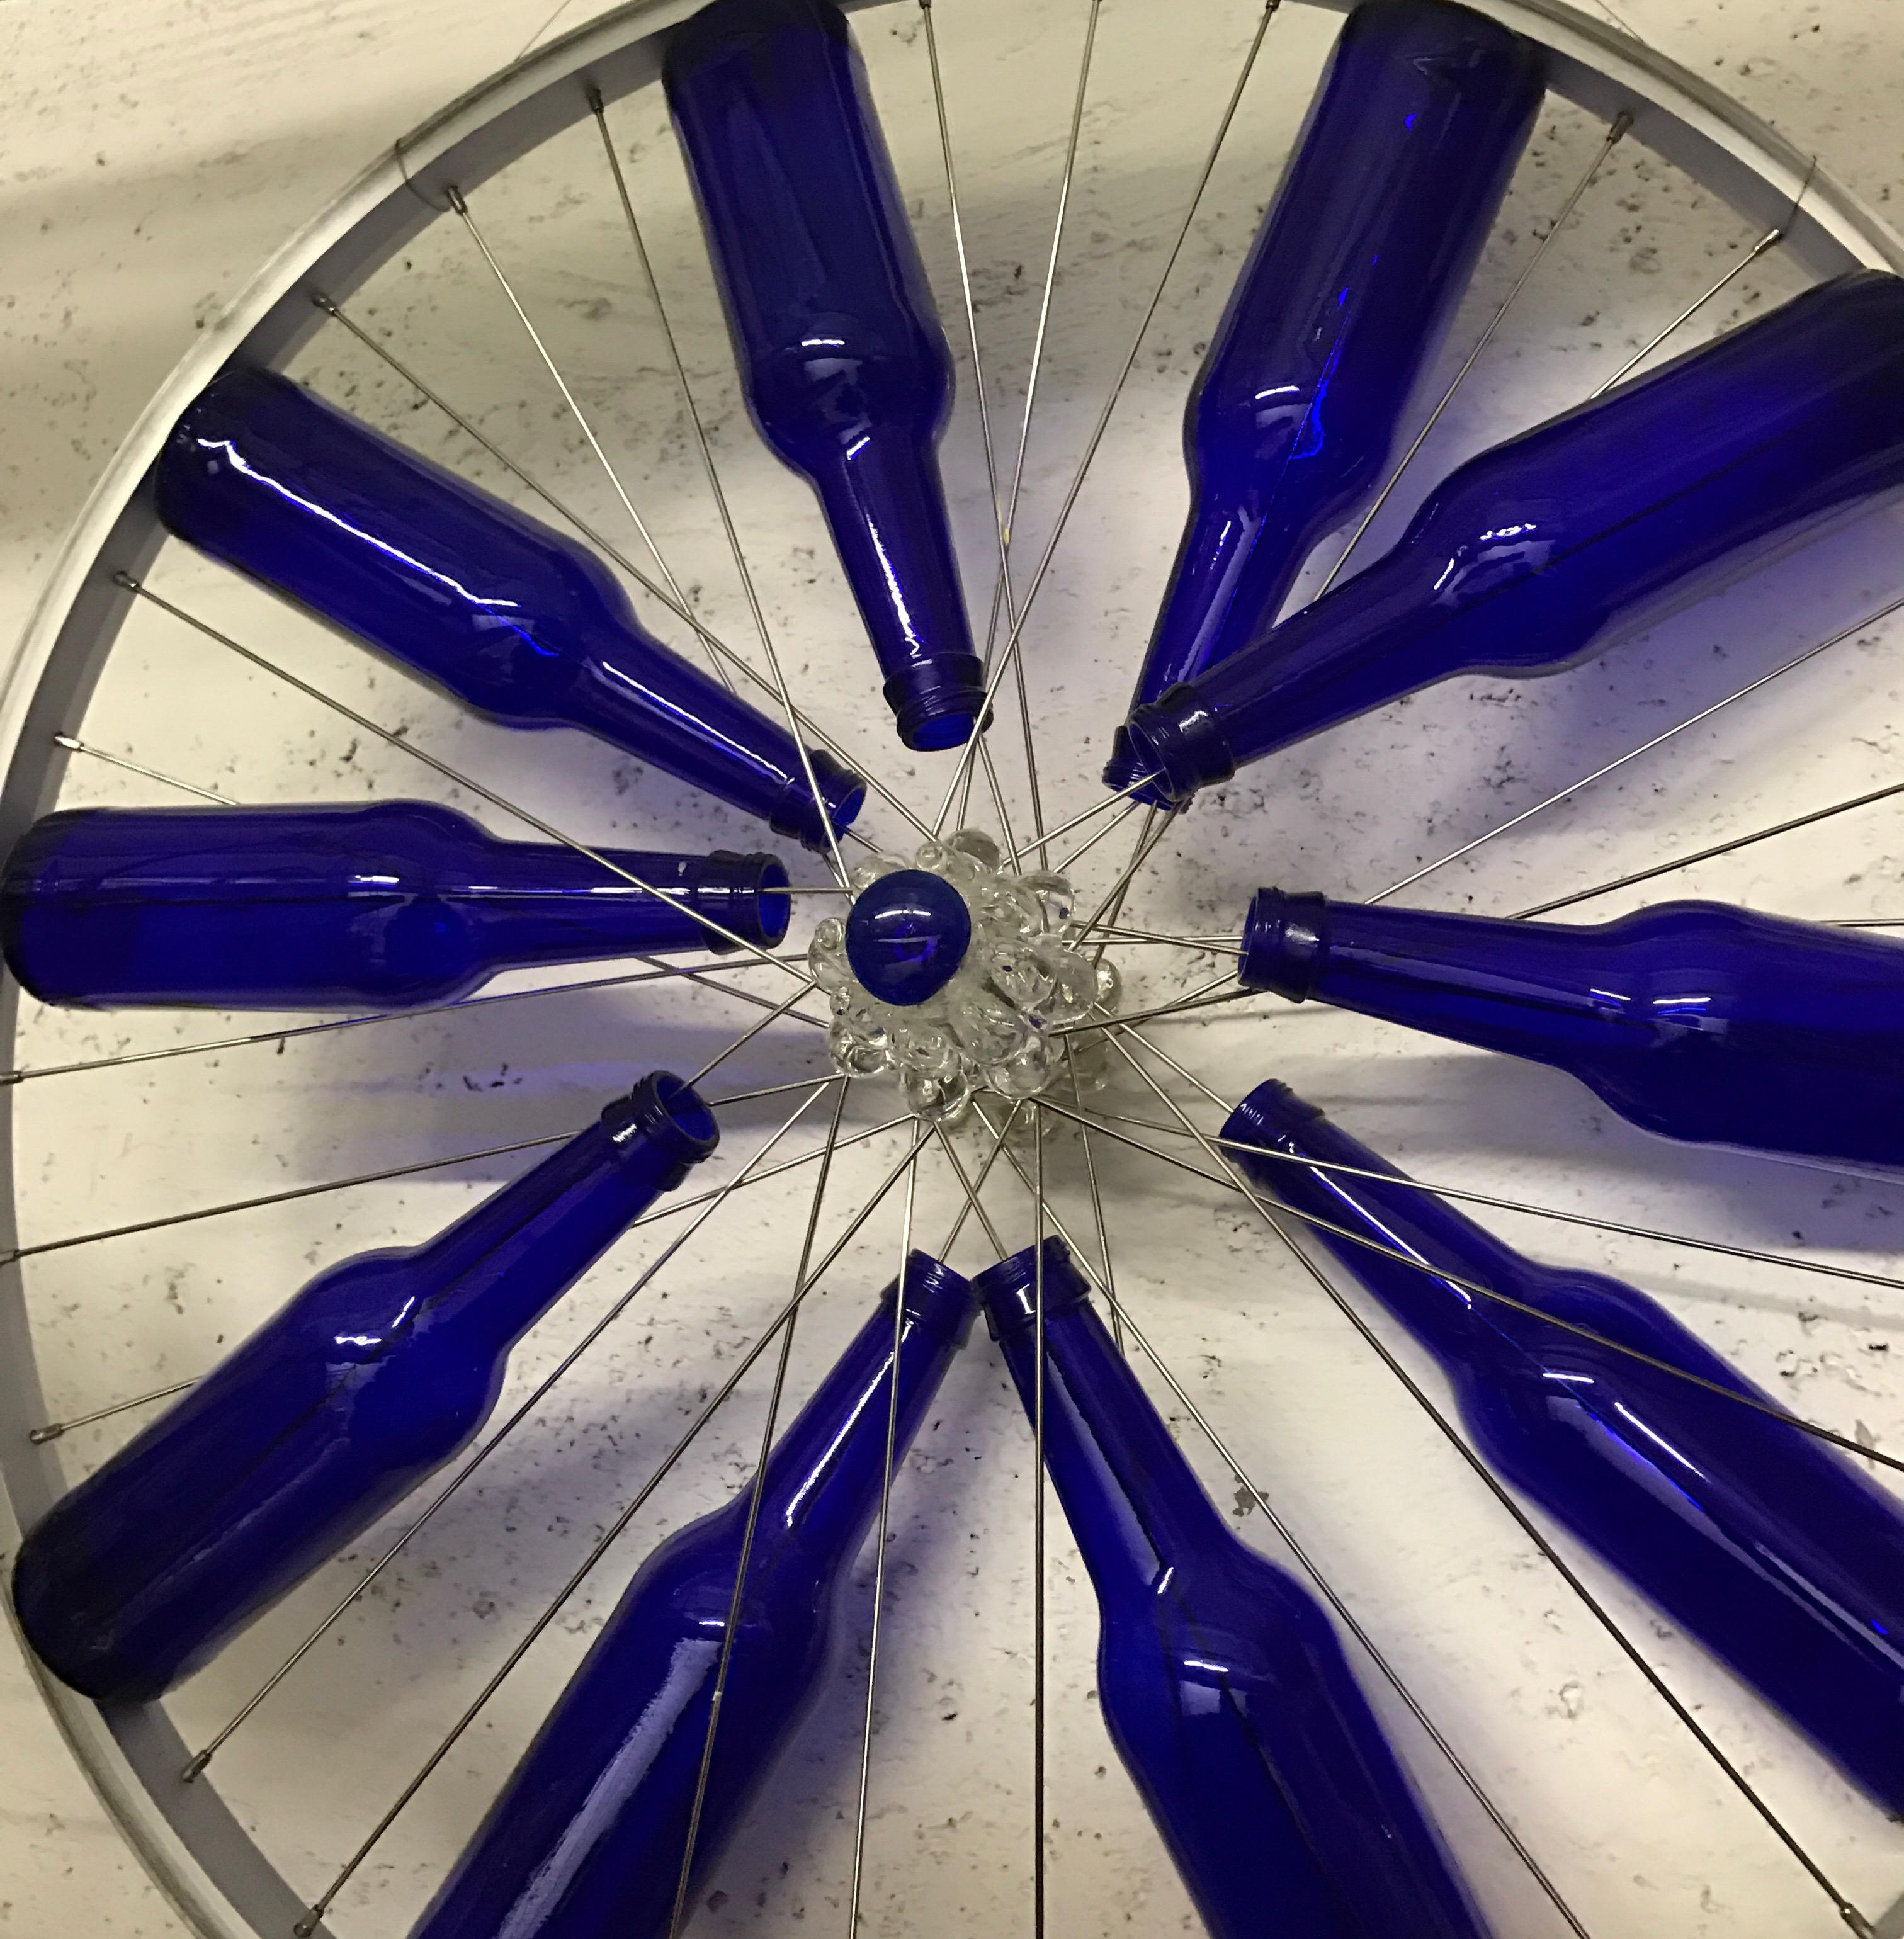 Hand-Crafted Modern Blue Bottles on a Bike Wheel Sculpture